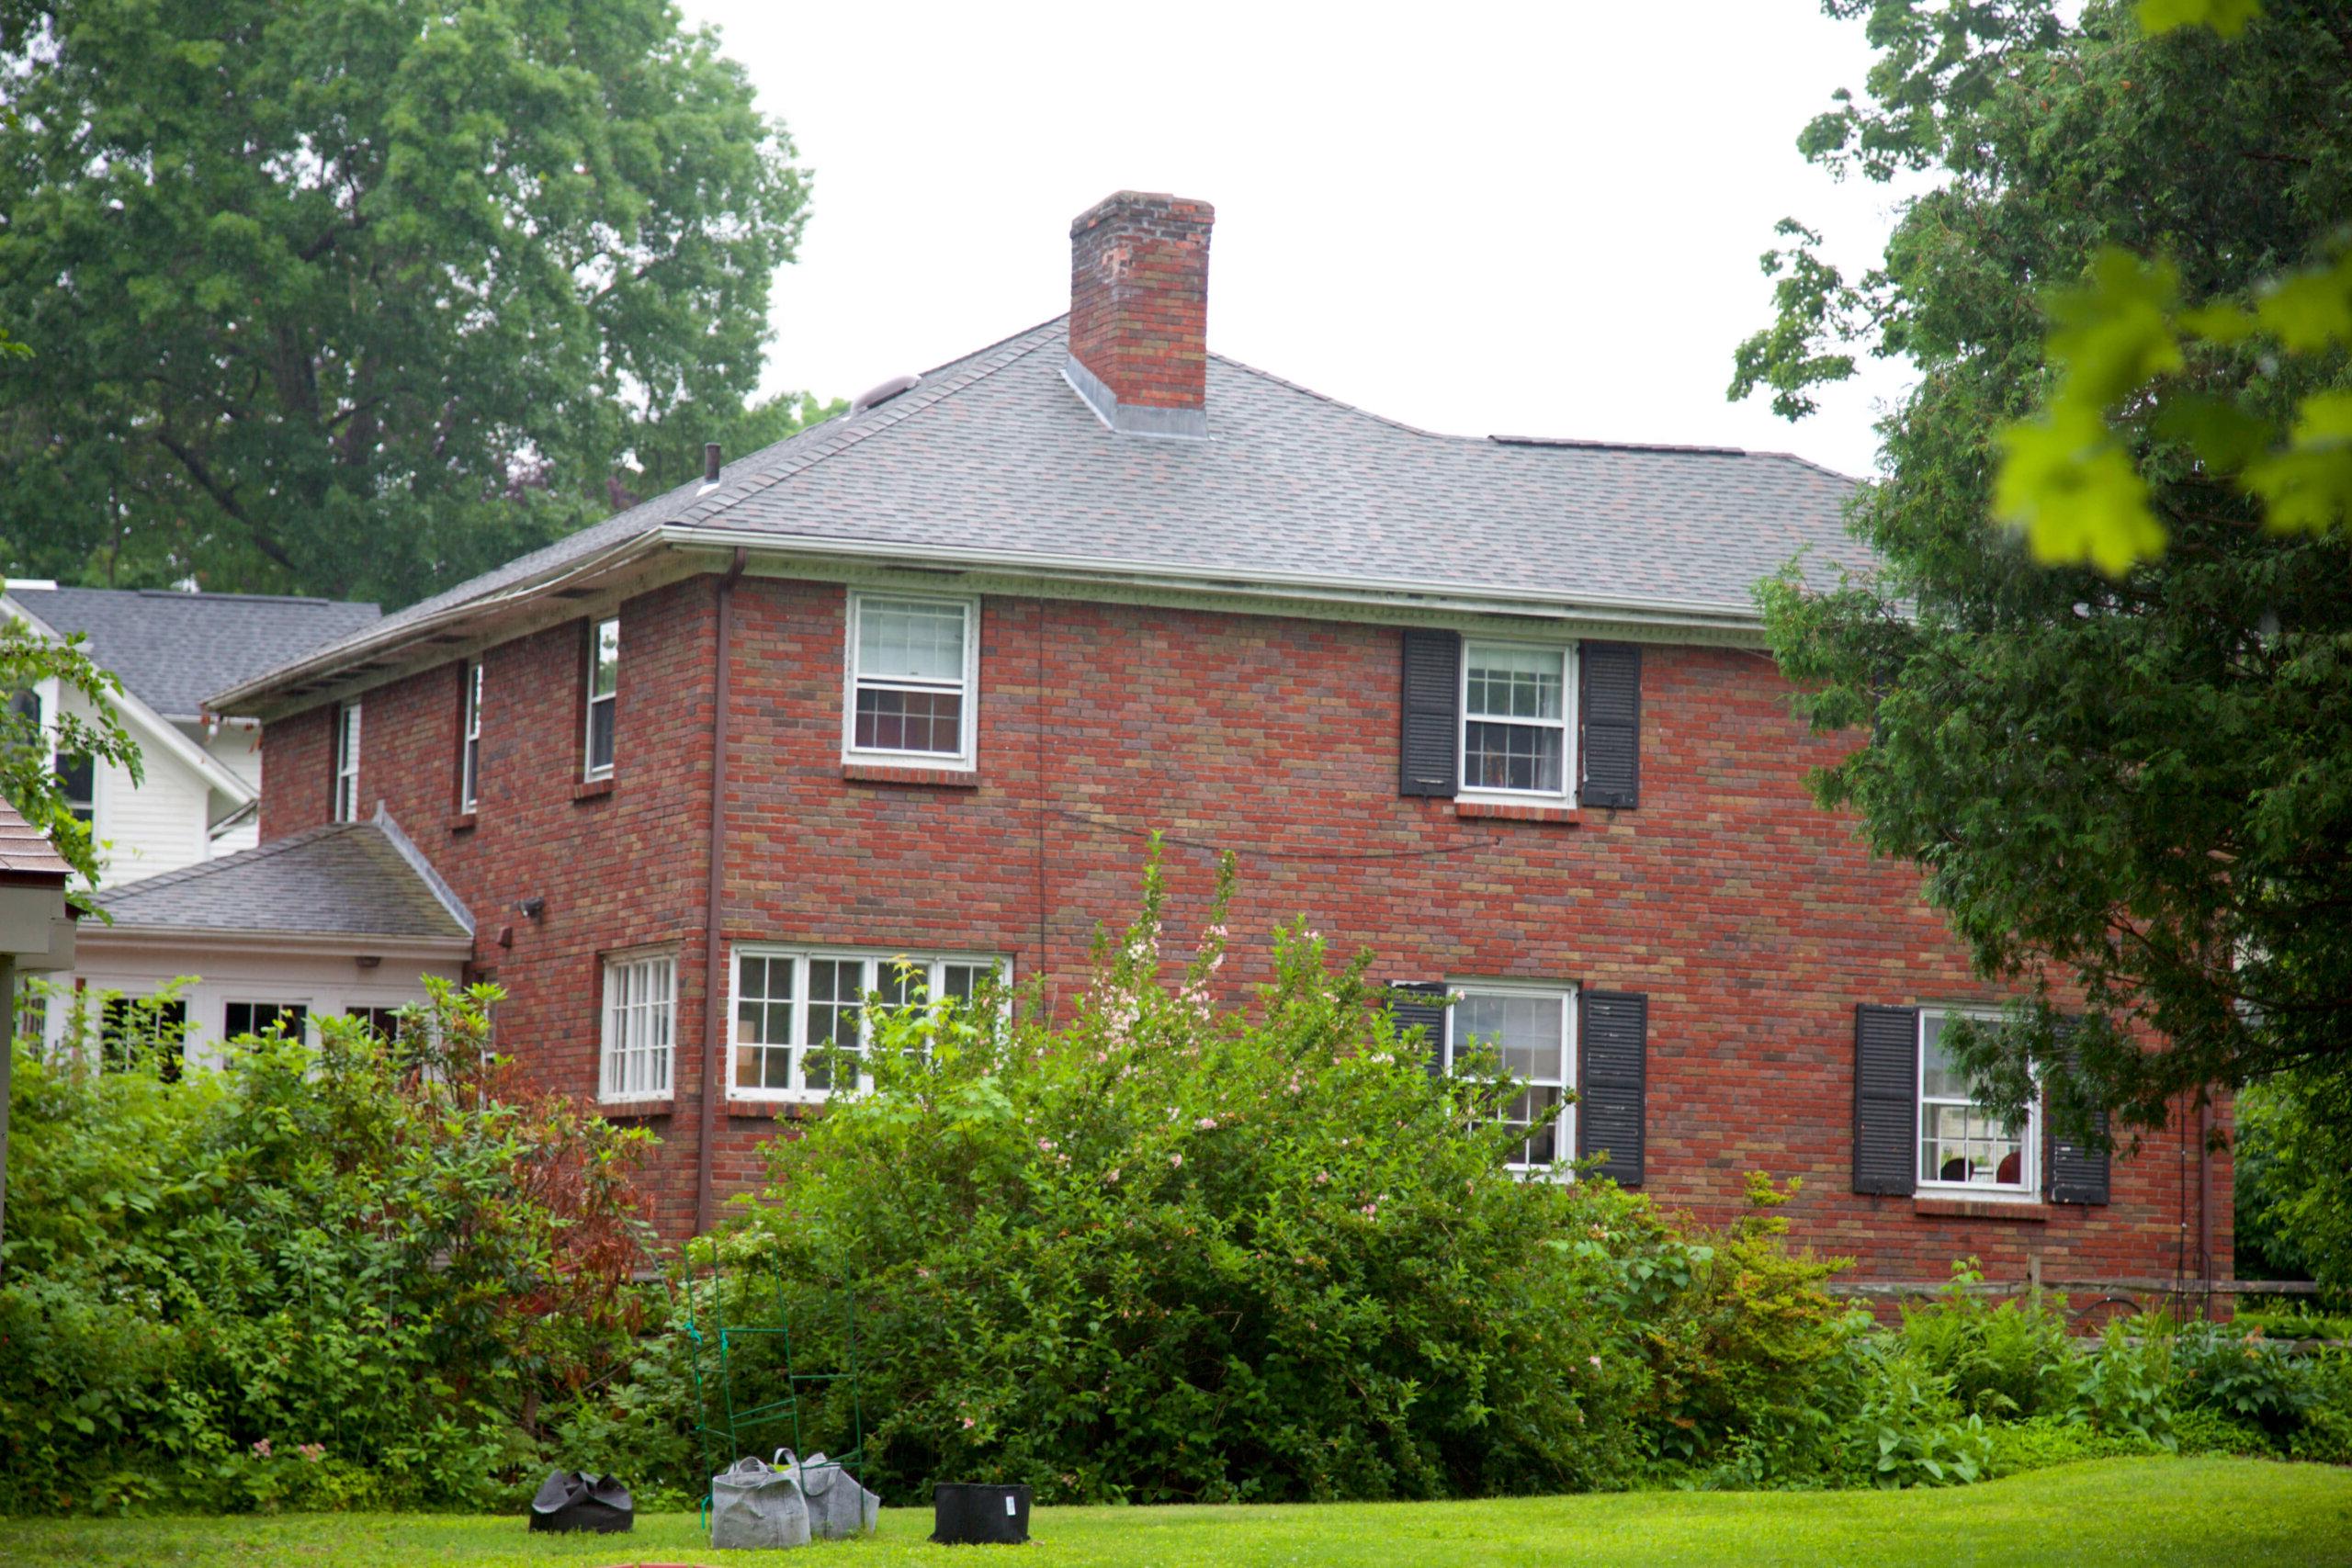 Photo of the Brick House